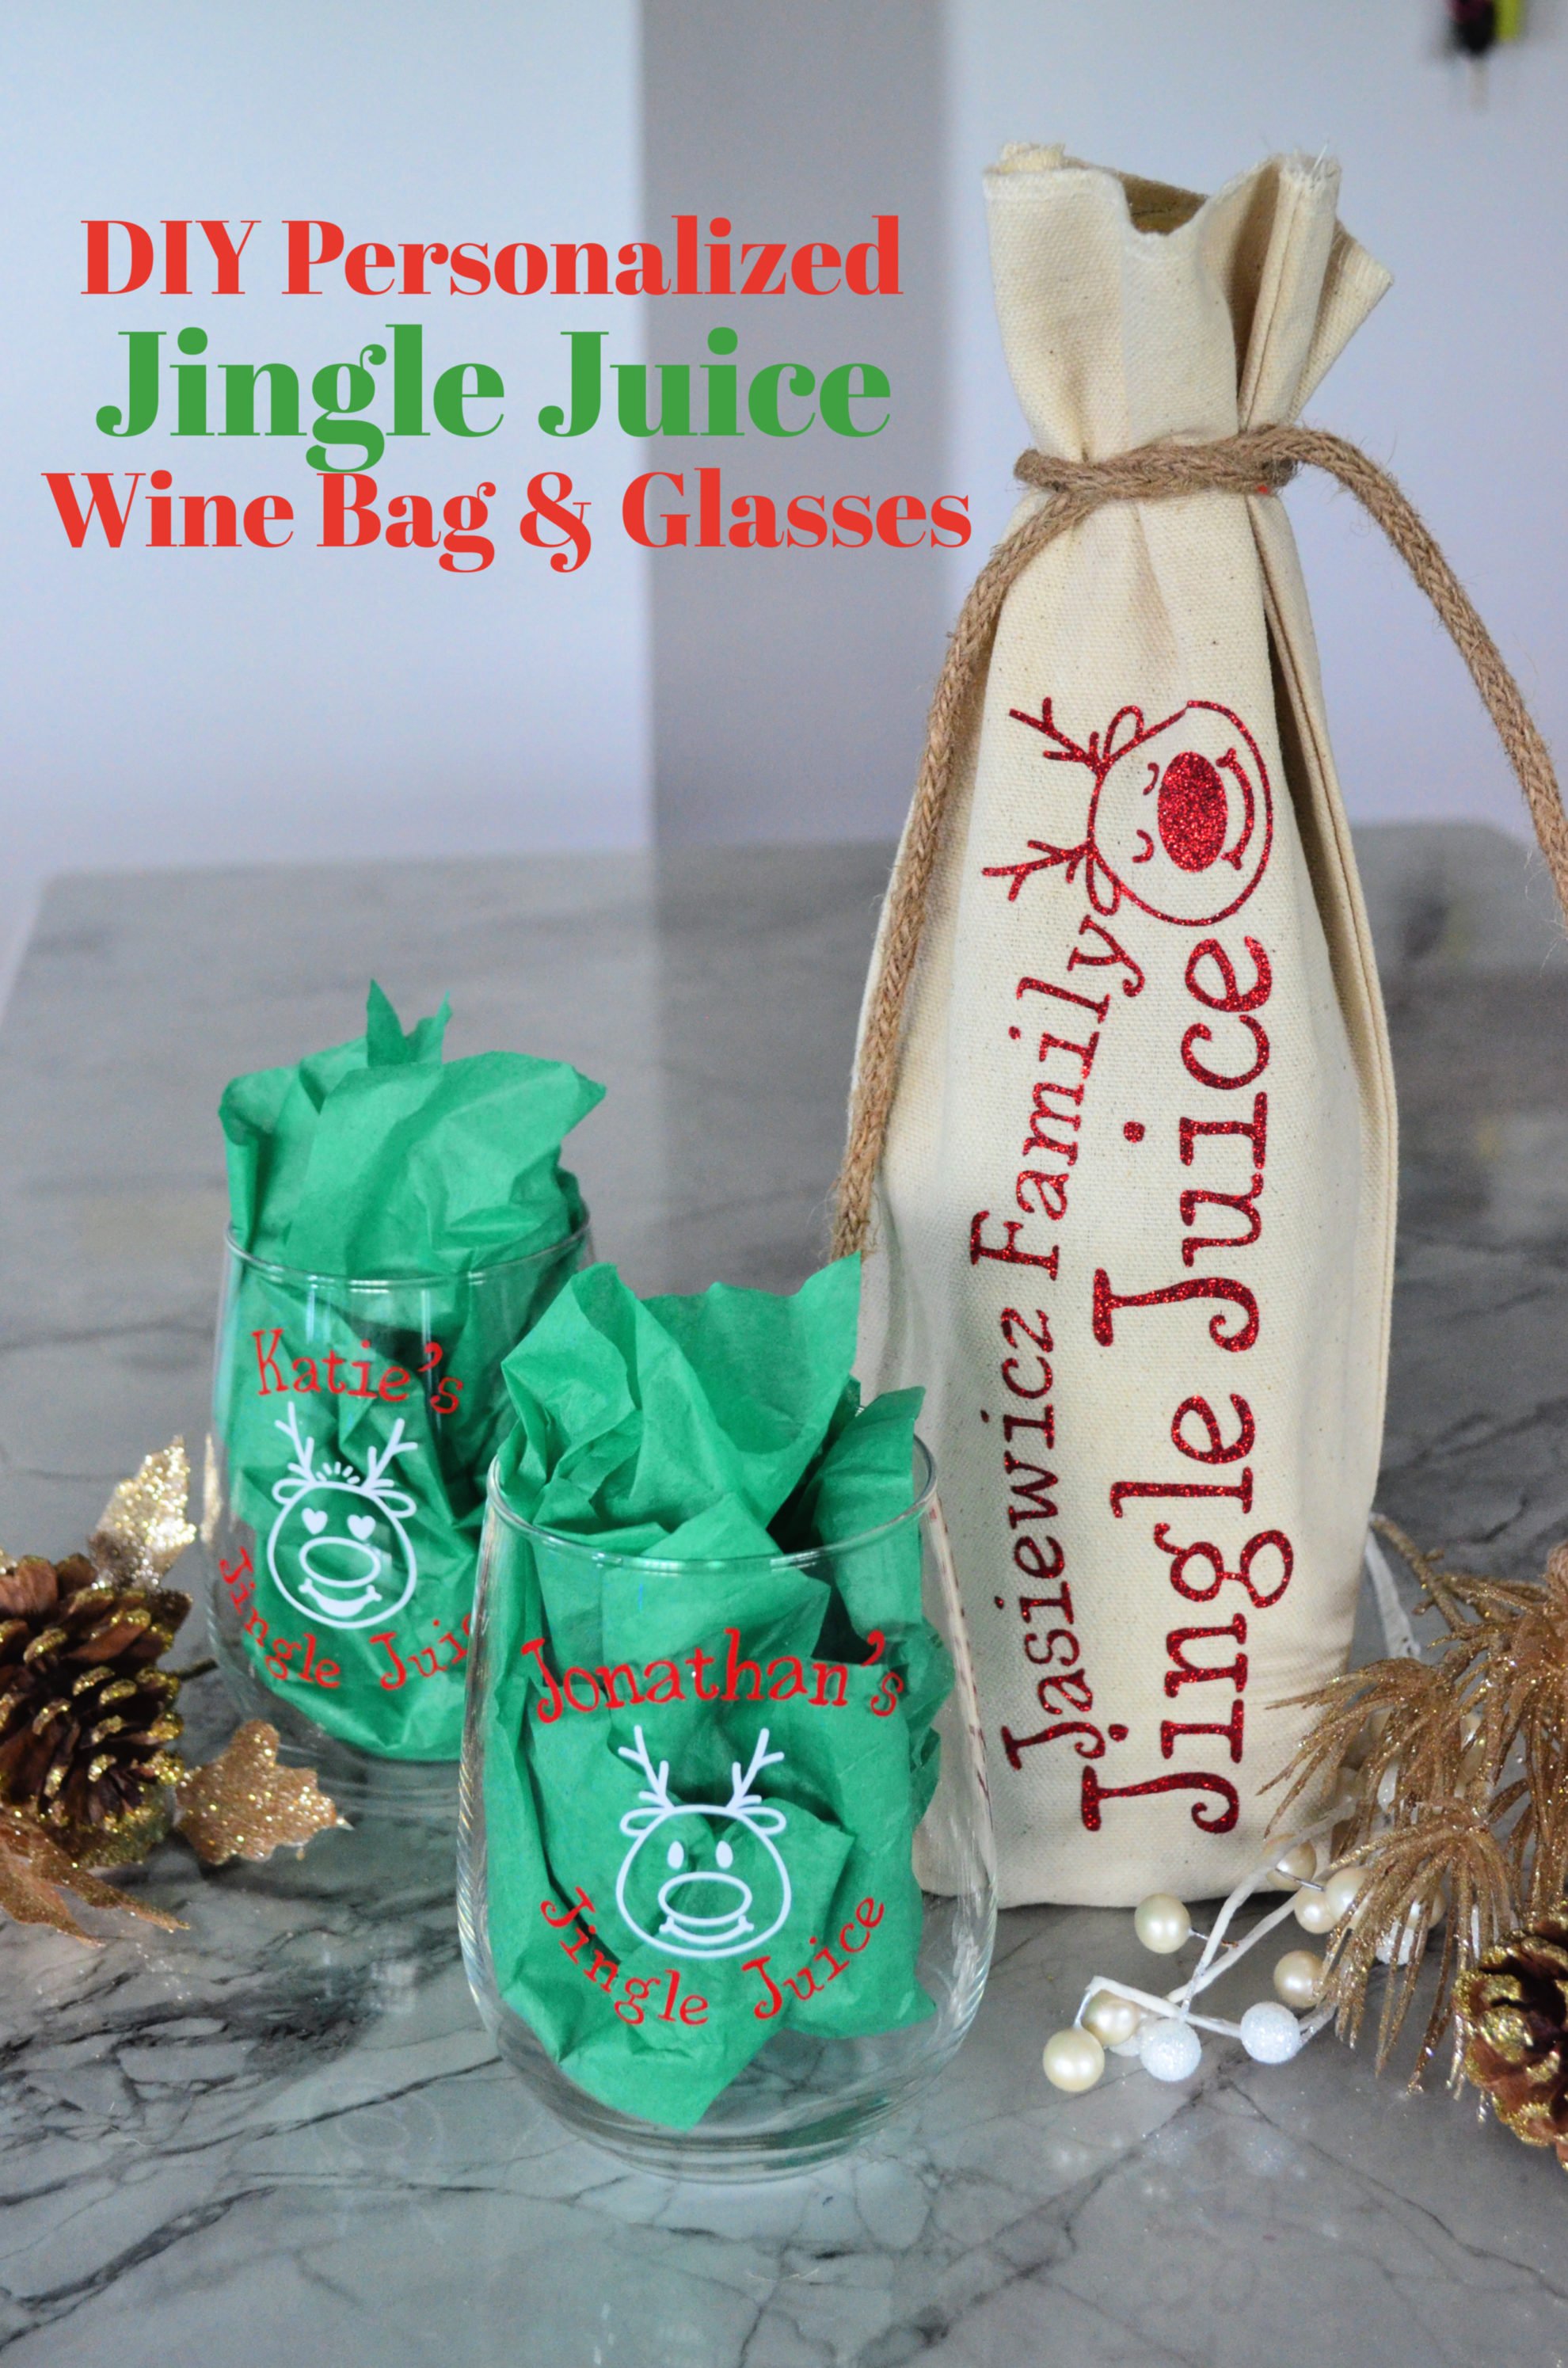 DIY Personalized Jingle Juice Wine Bag & Glasses